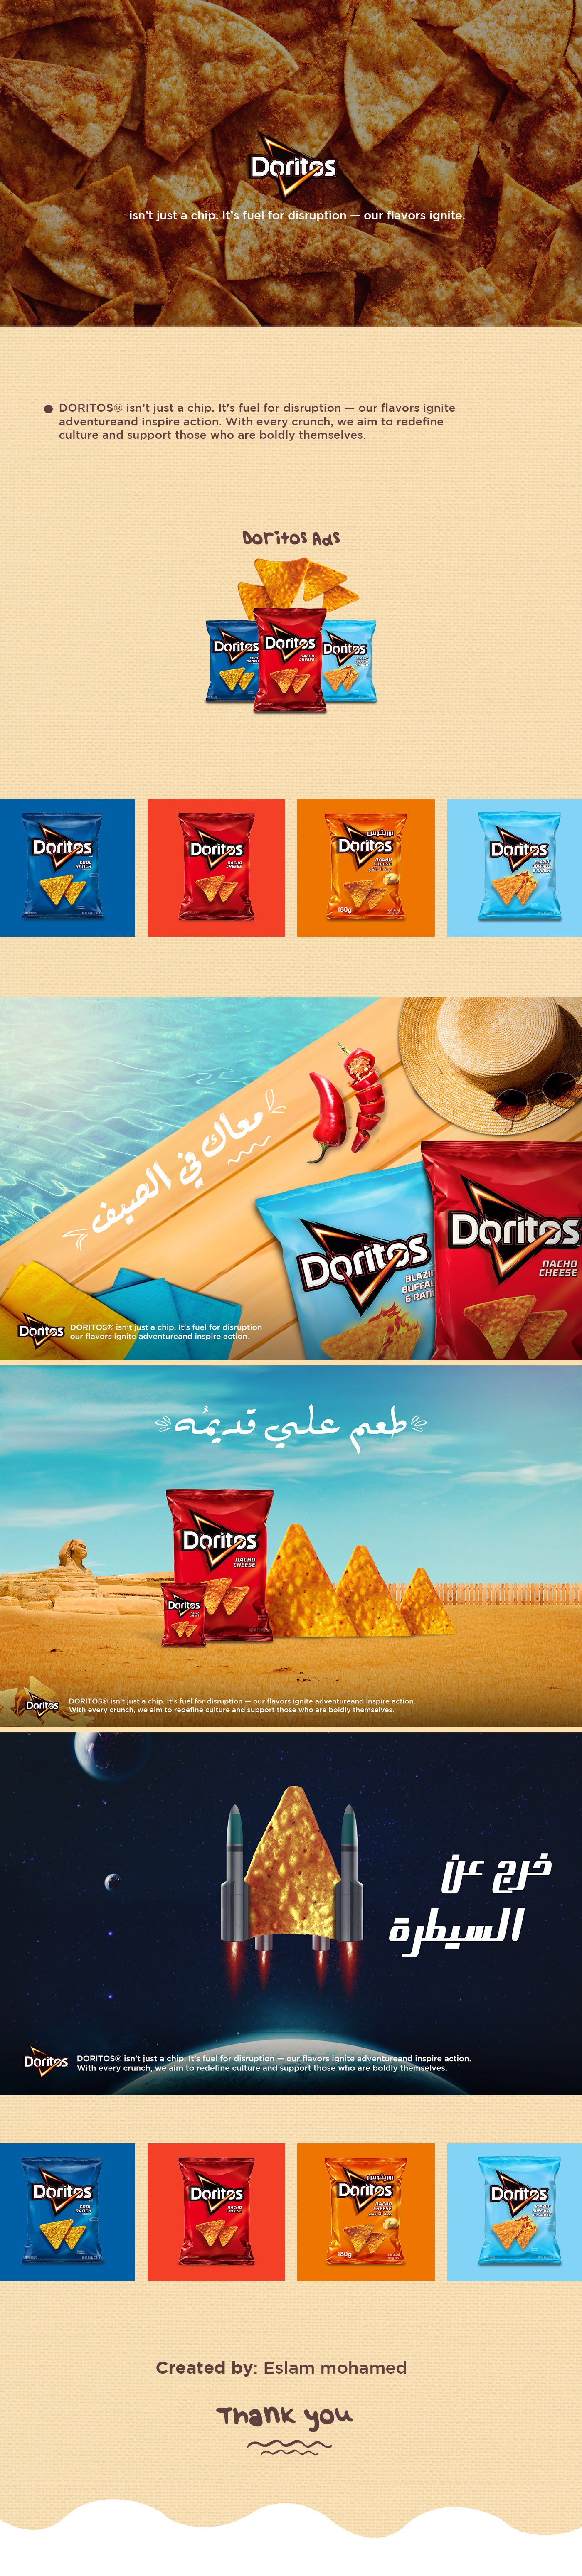 #ads #advrtising #color #concept #Creative #Design #effects  #egypt #inspiration #socialmedia  